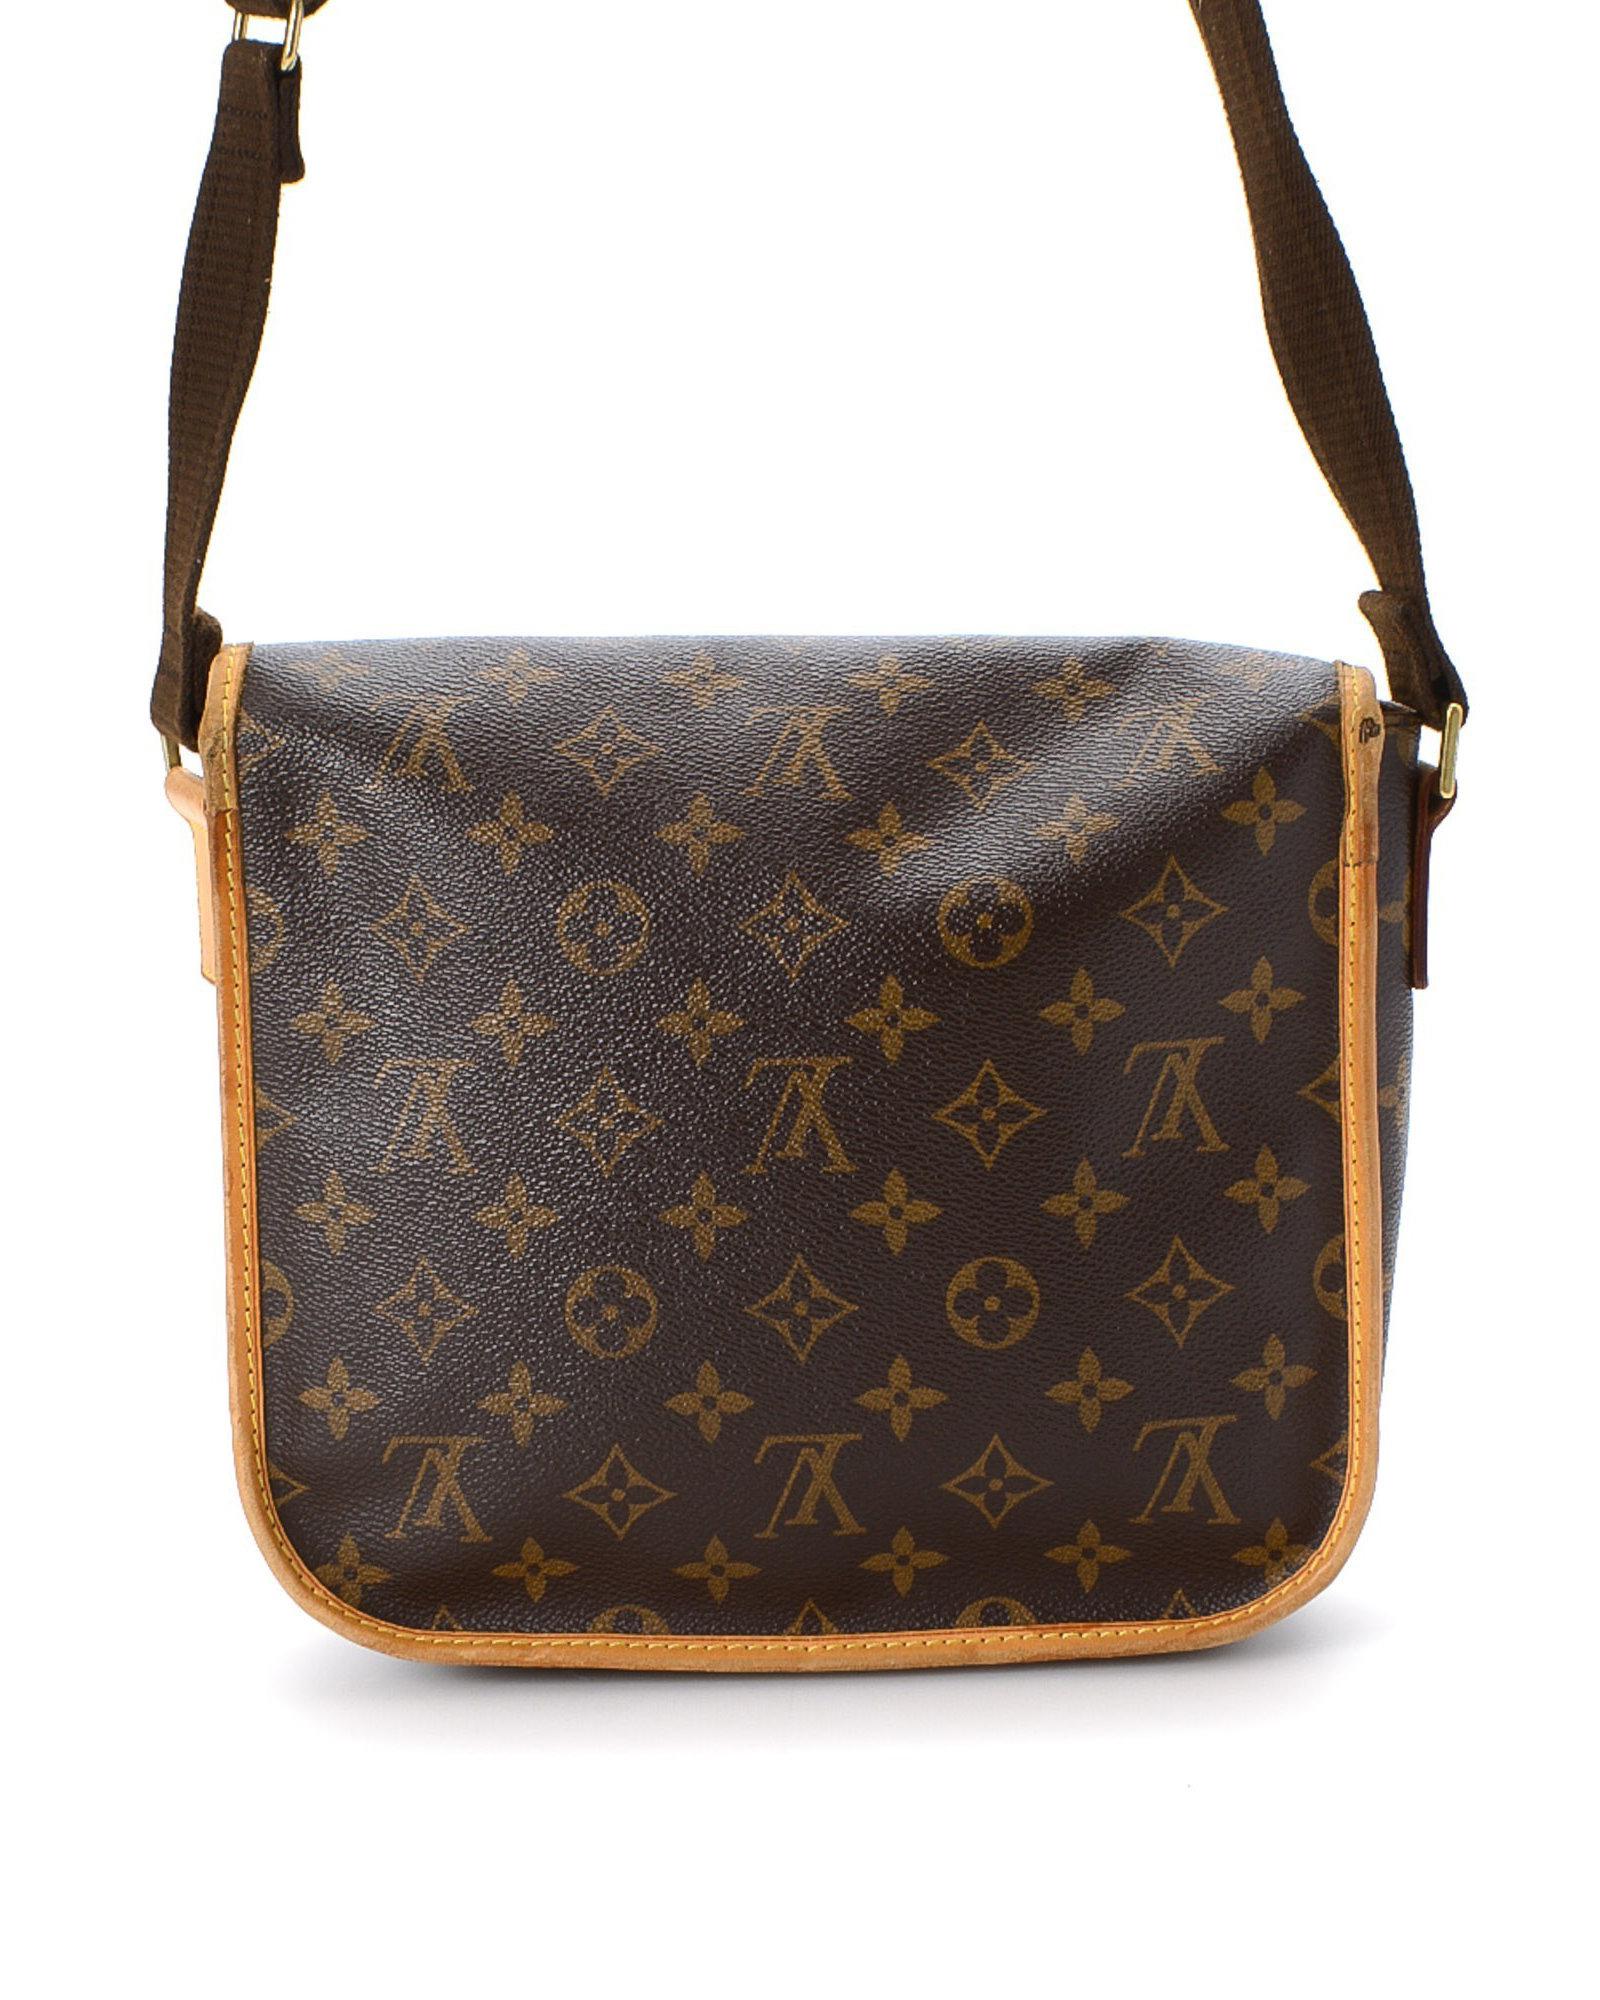 Louis Vuitton Canvas Messenger Bag - Vintage in Brown for Men - Lyst